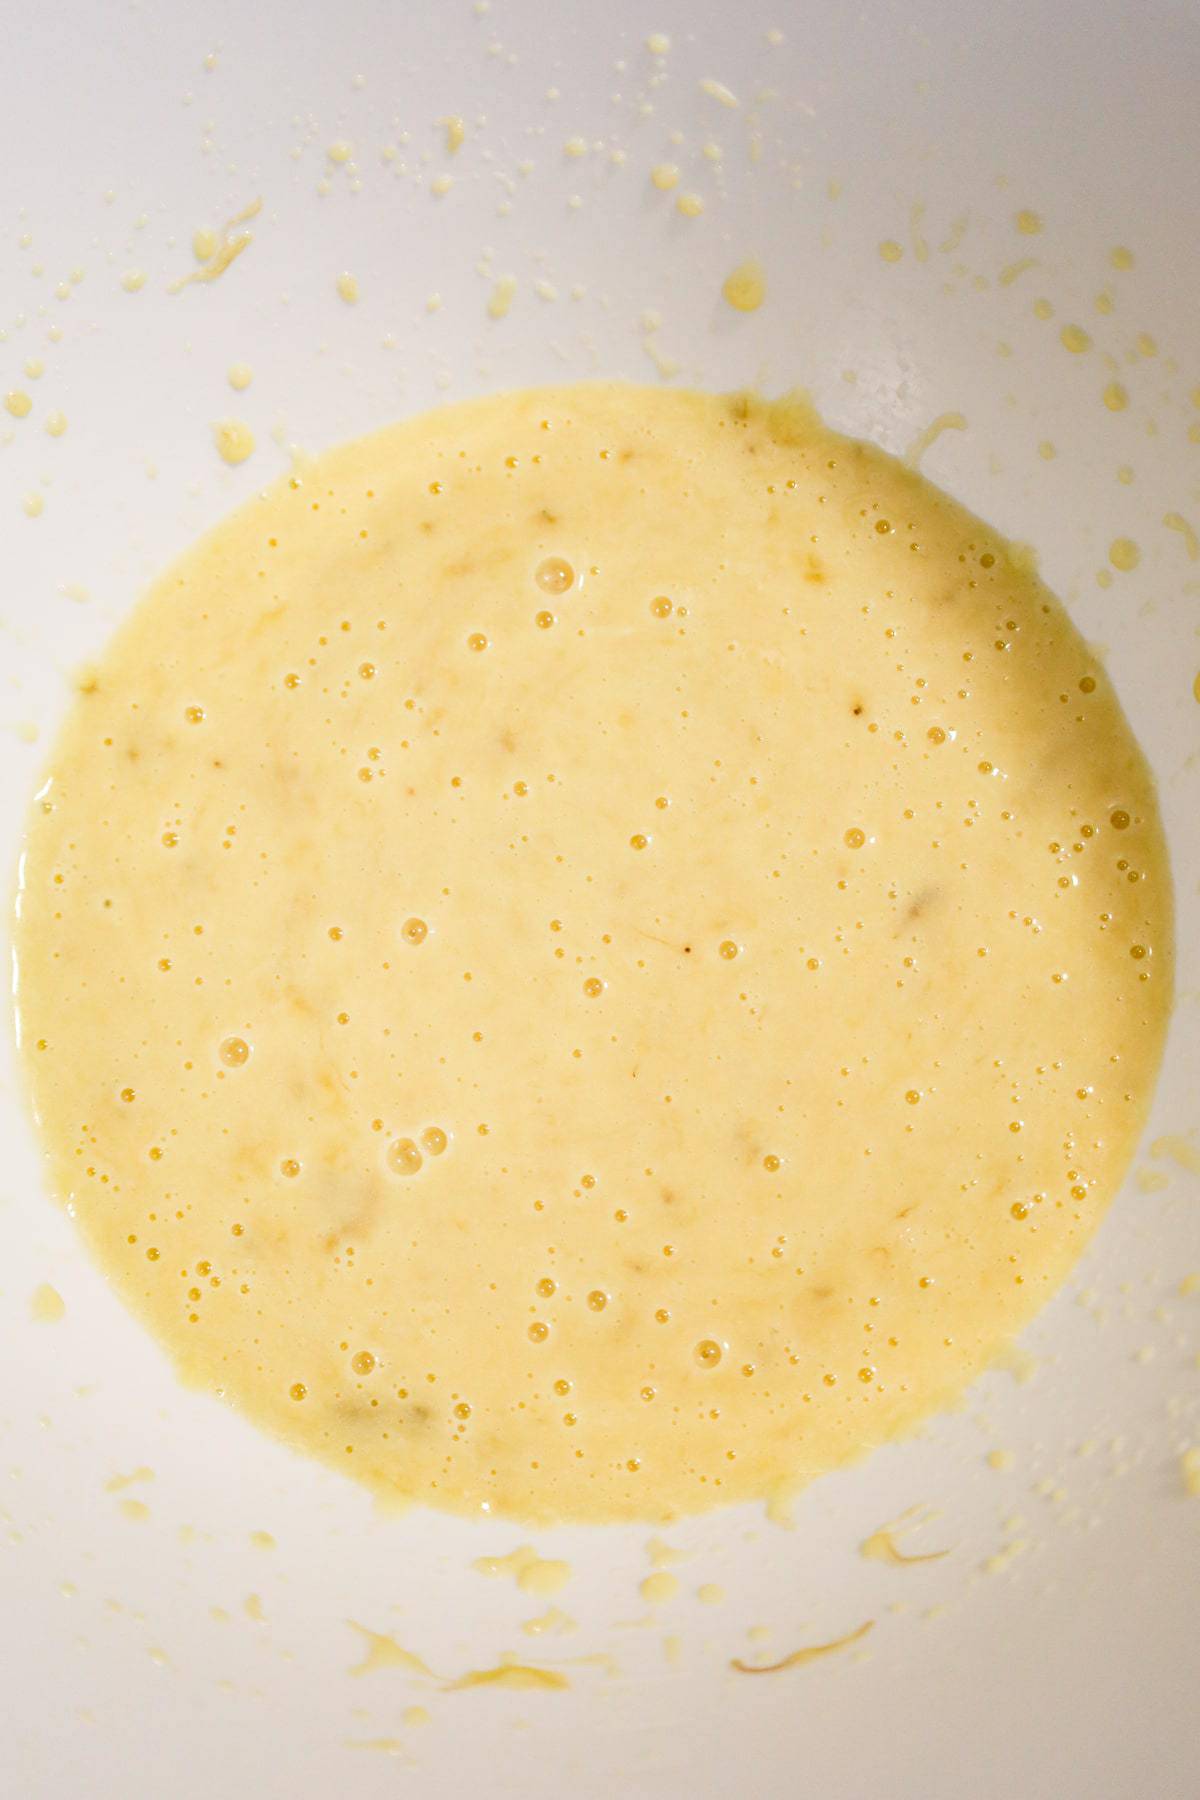 creamy banana mixture in a mixing bowl